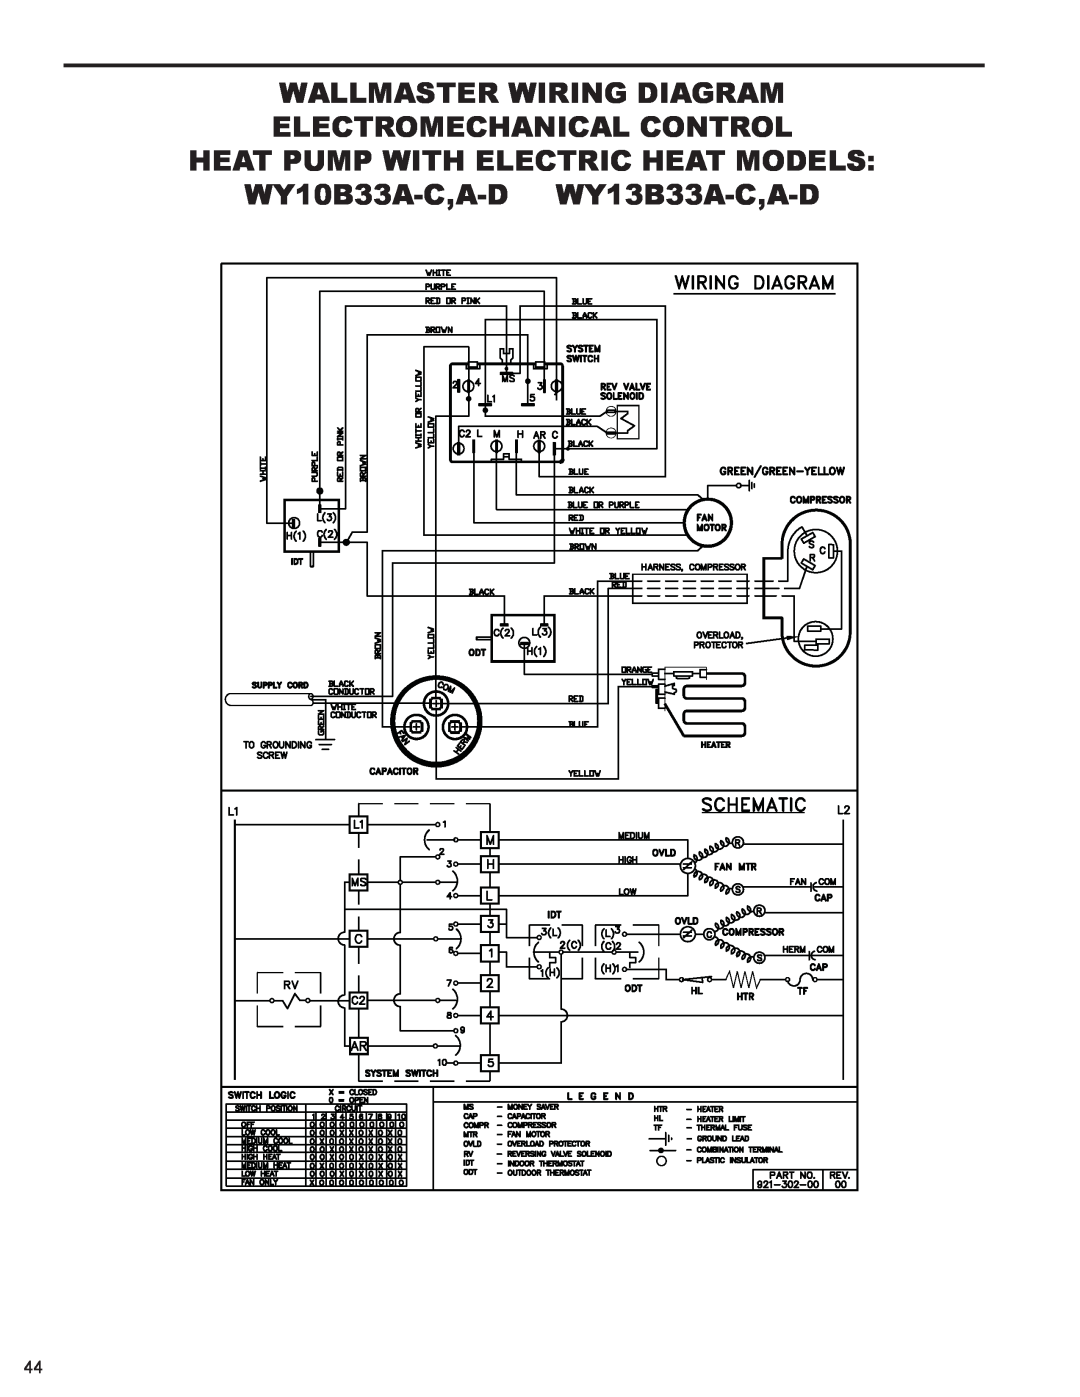 Friedrich 2008, 2009 service manual WY10B33A-C,A-D WY13B33A-C,A-D, Wallmaster Wiring Diagram, Electromechanical Control 